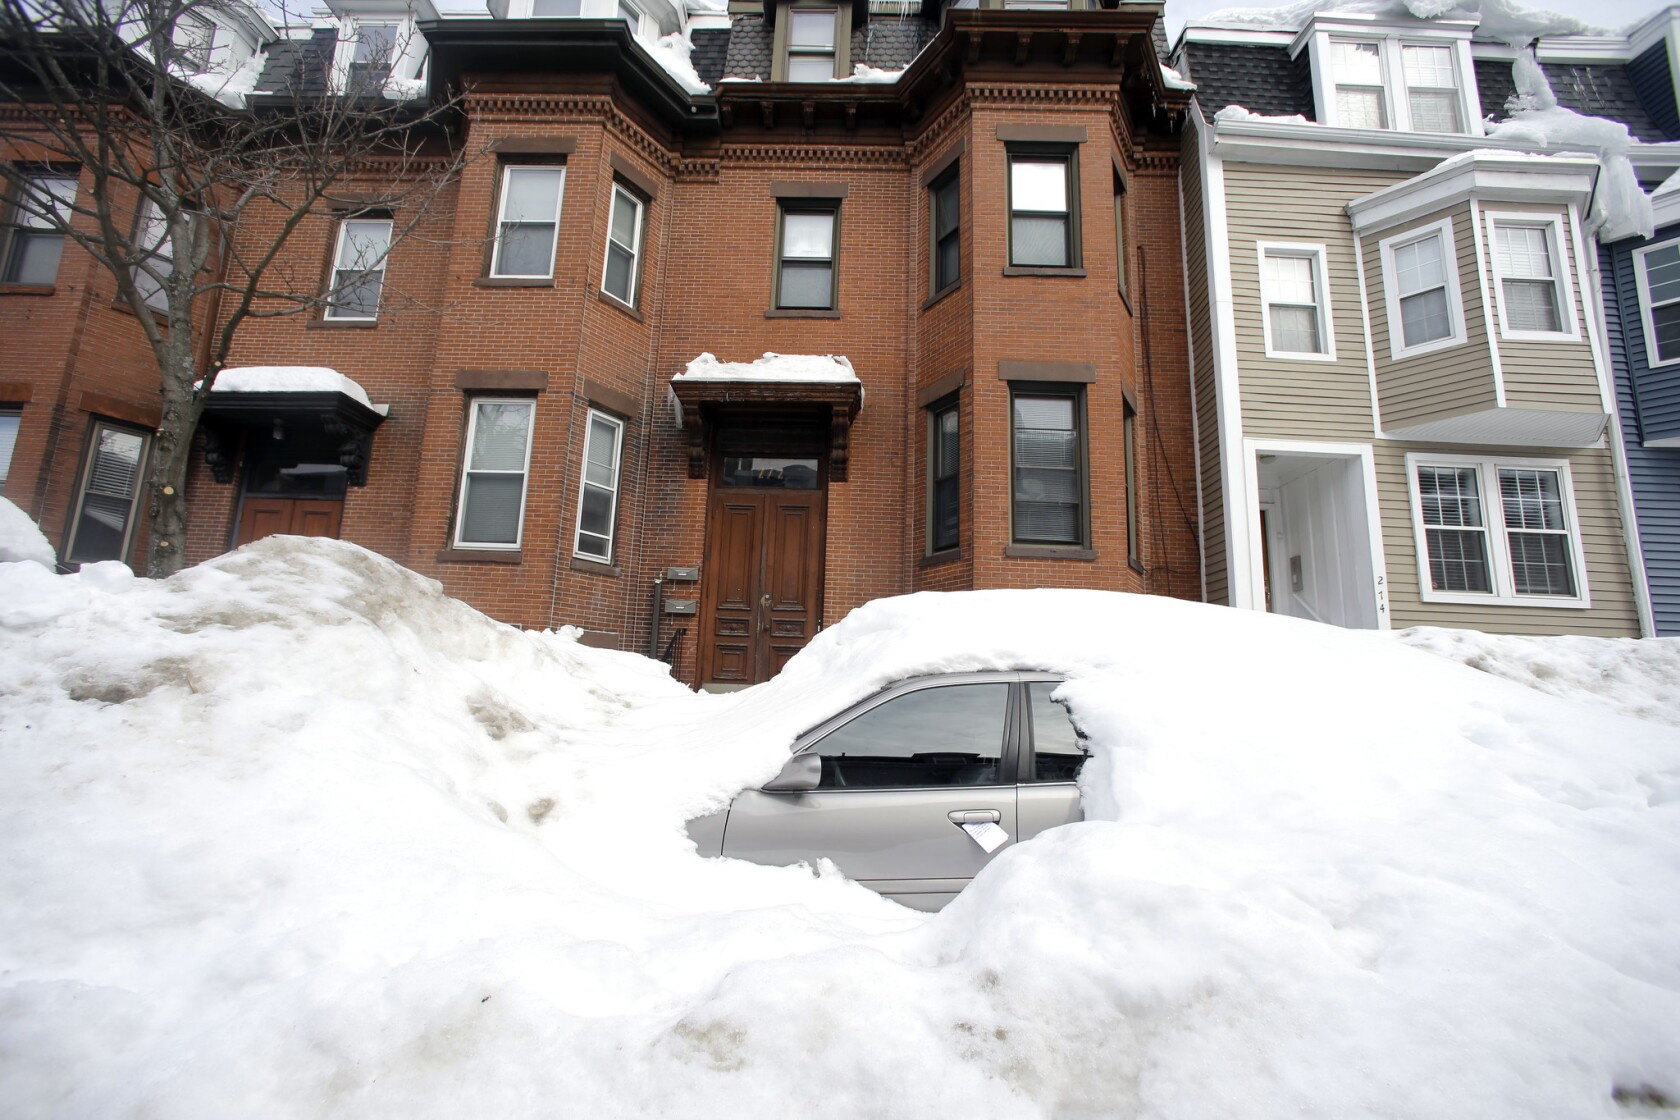 Boston snowfall tops 9 feet, breaking city's alltime record Los